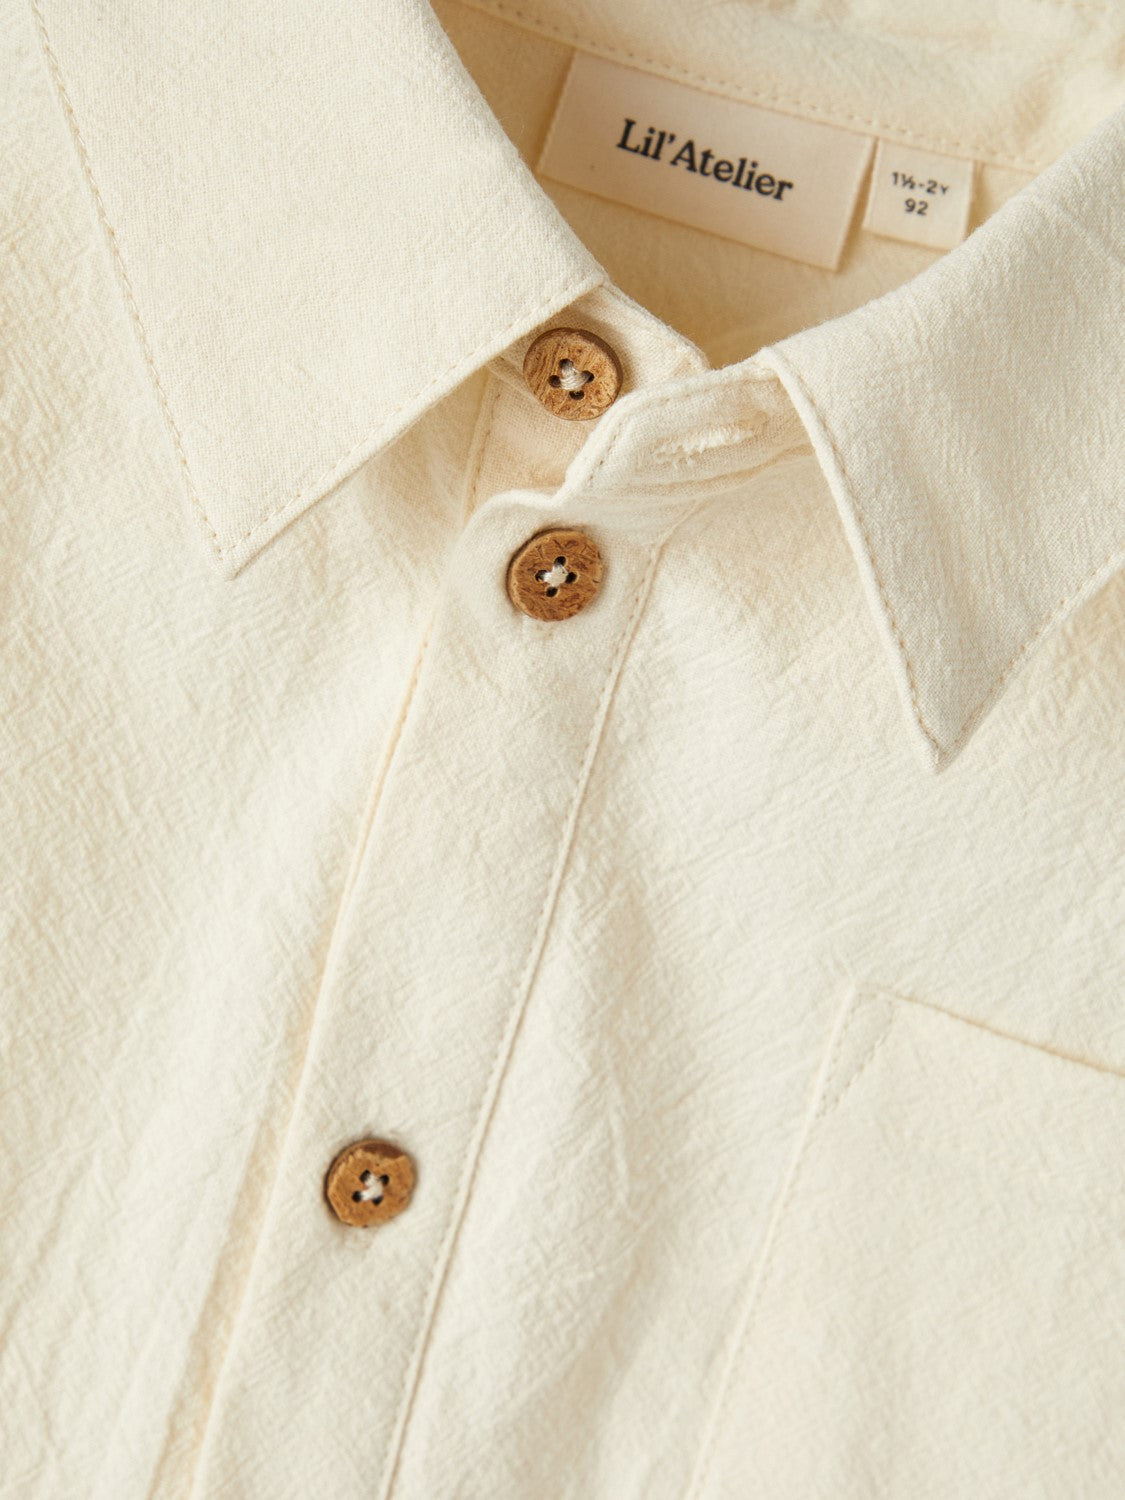 Short-sleeved ecru shirt with pocket